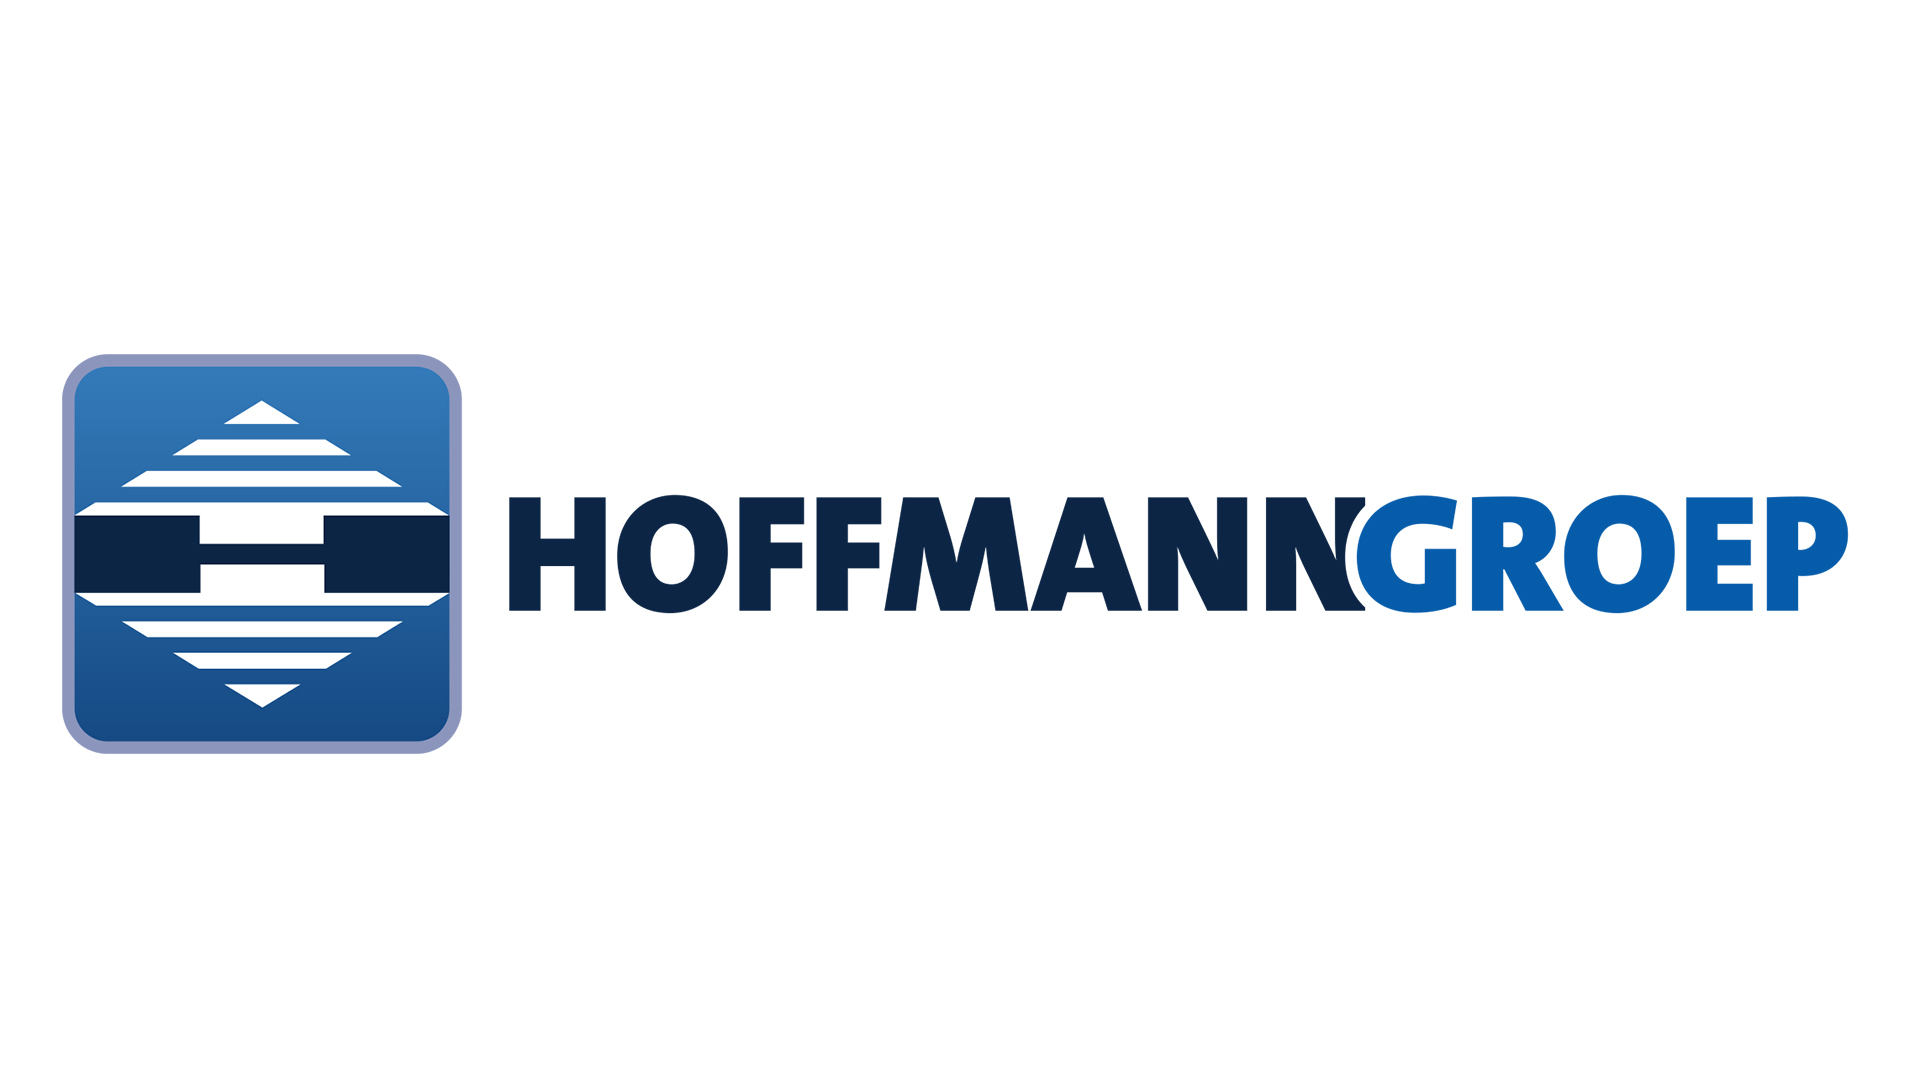 Hoffmann Groep